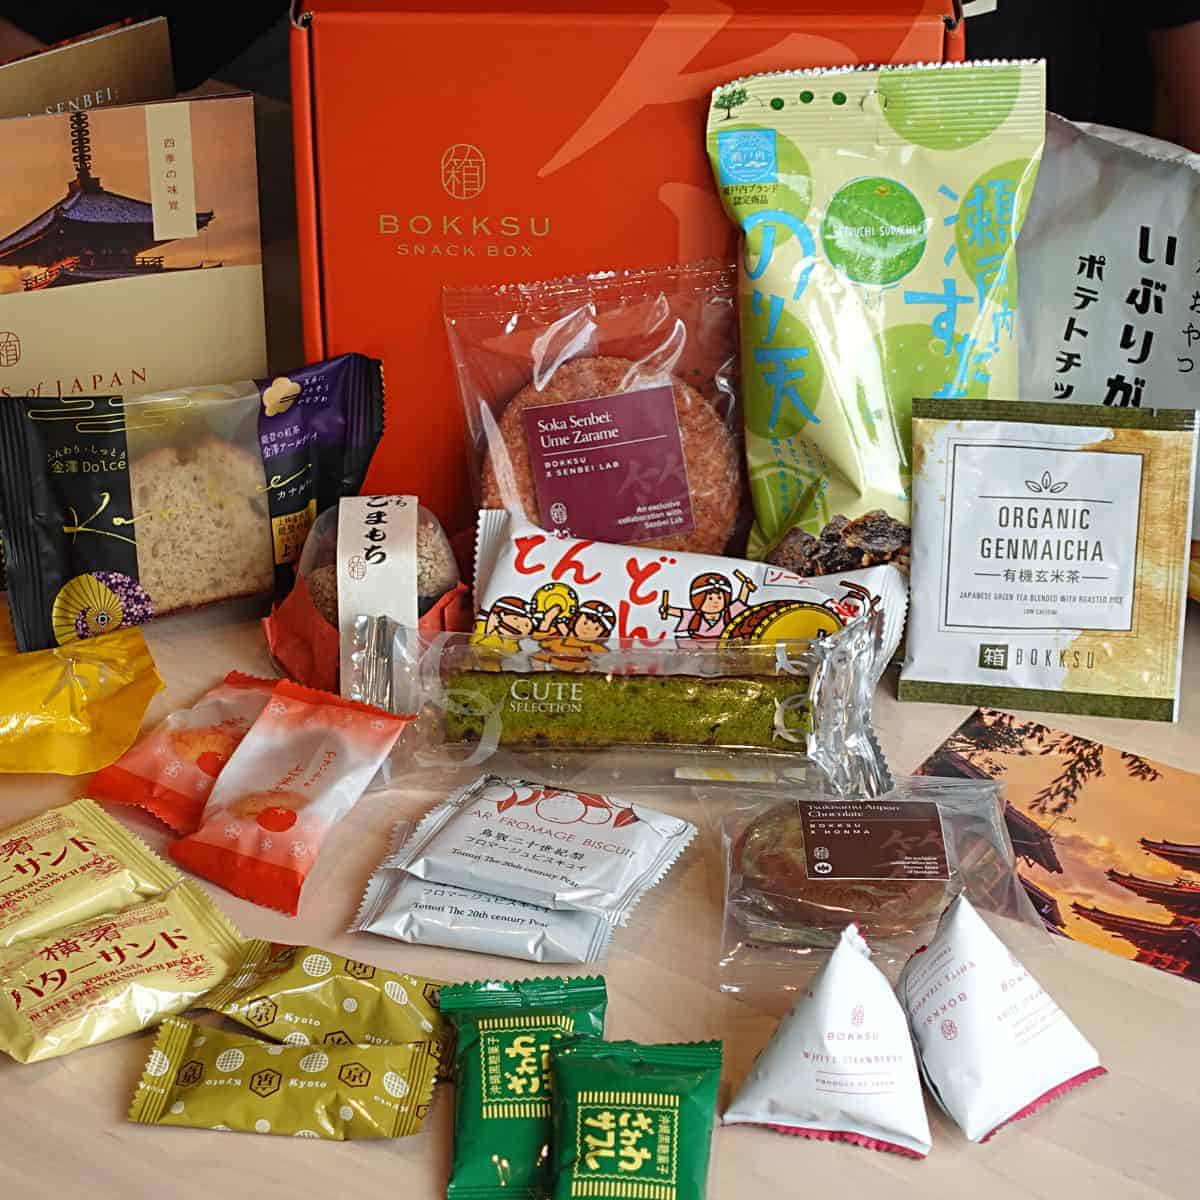 Bokksu Japanese snack box spread out